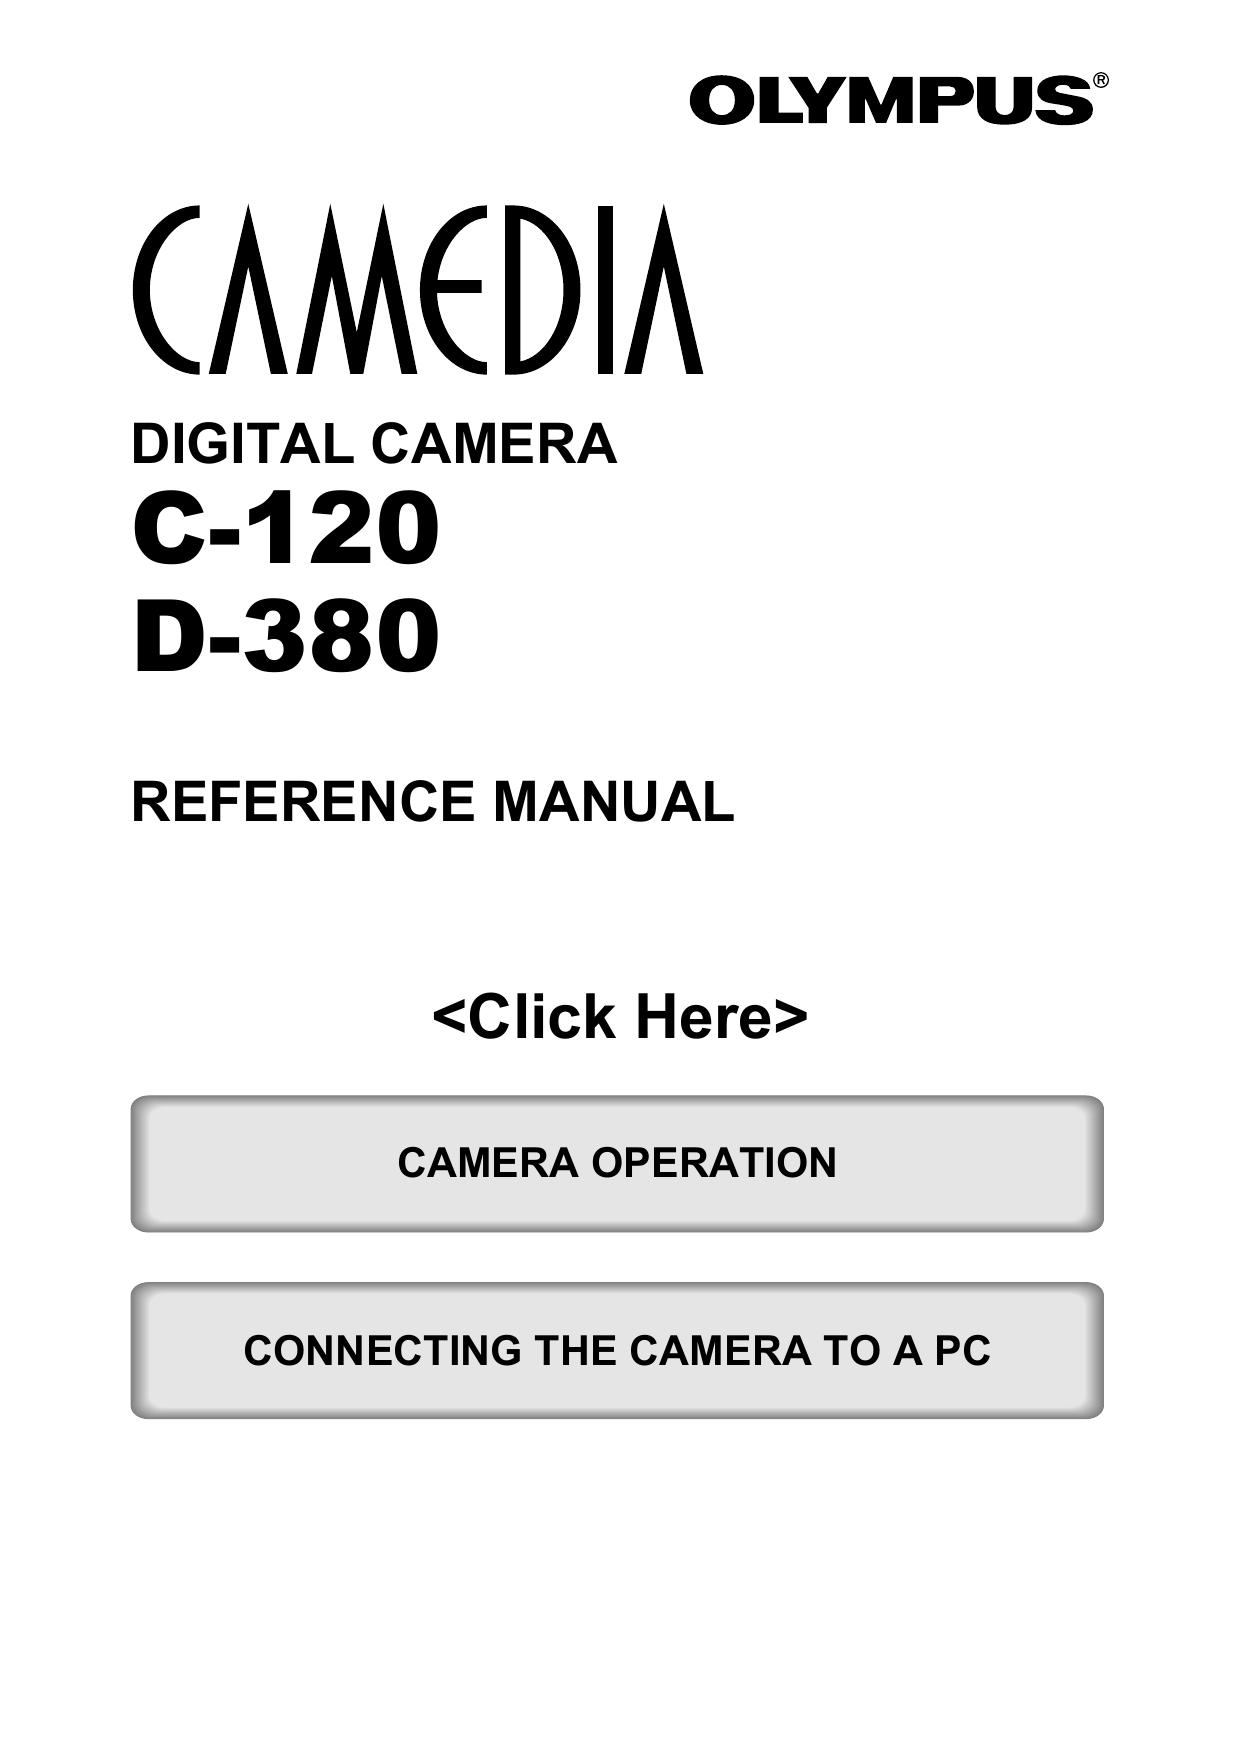 Olympus d-380 Camcorder User Manual